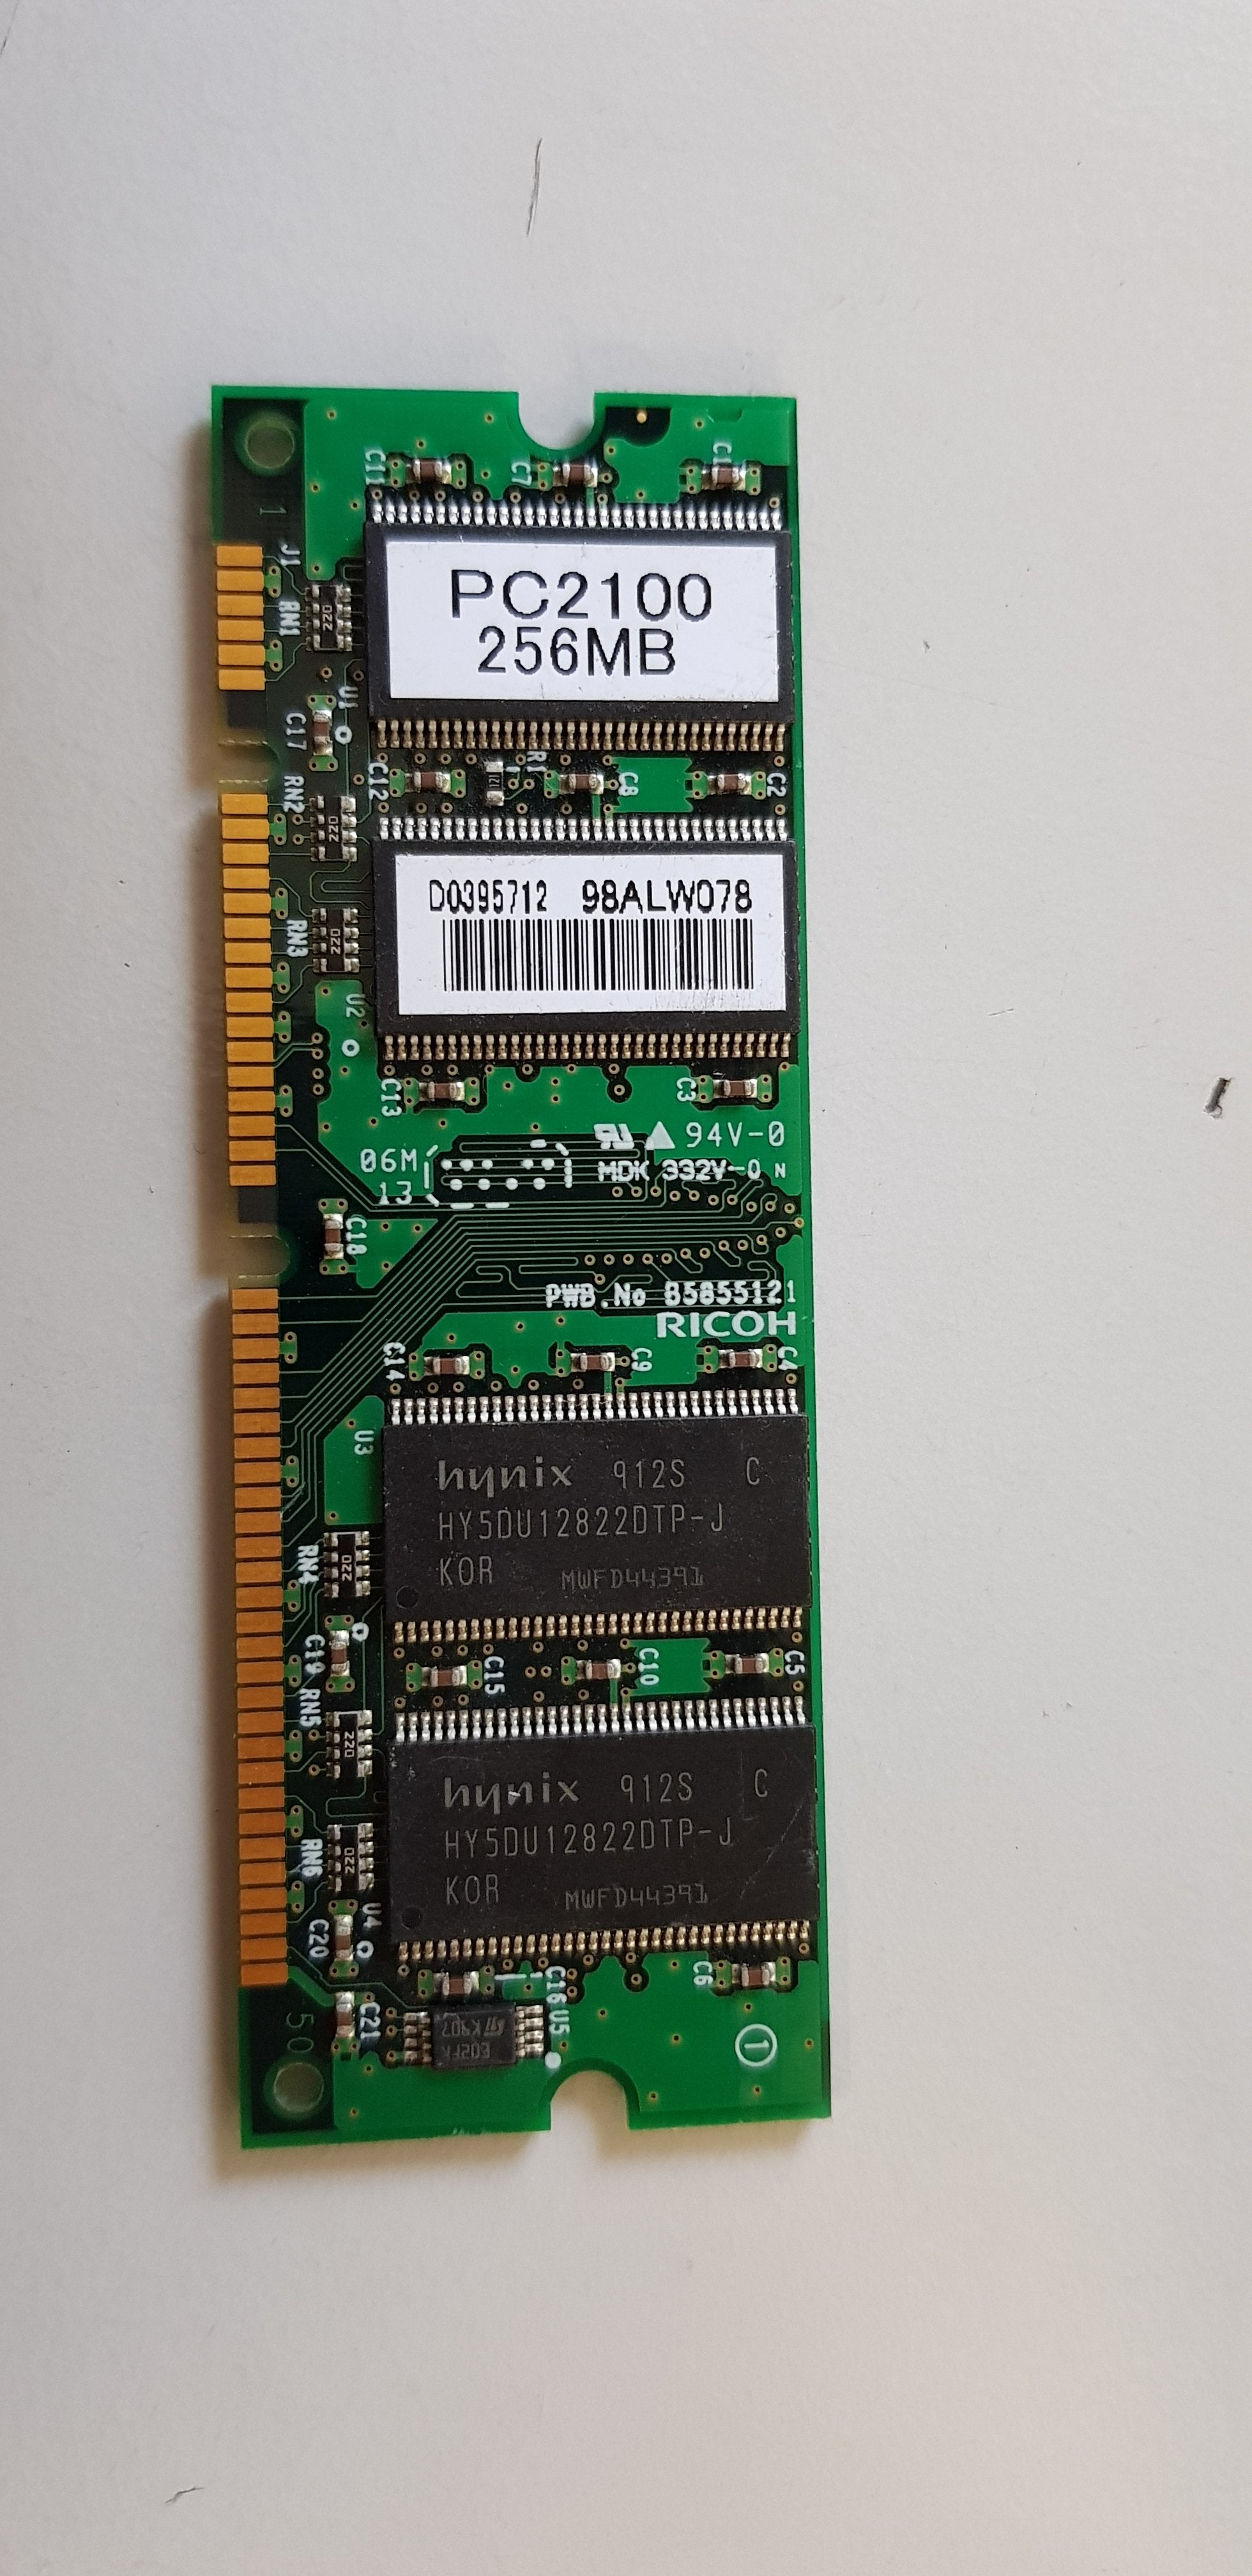 Ricoh 256MB PCB DDR1 Assy DIMM Printer Memory Module (D0395712)